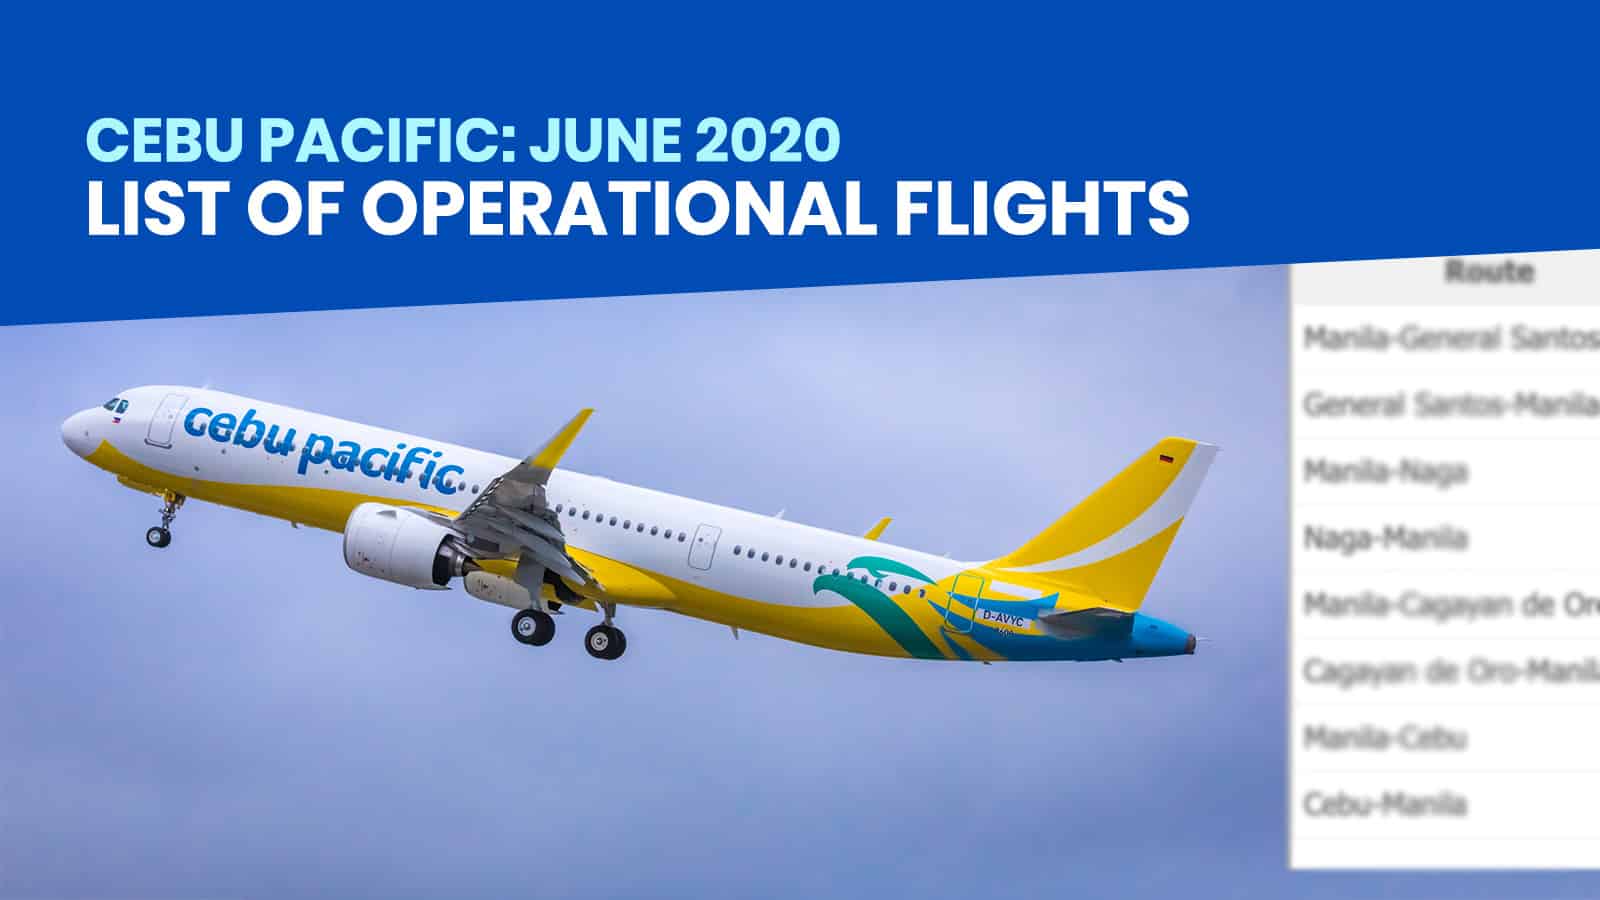 CEBU PACIFIC: List of Operational Flights for June 2020